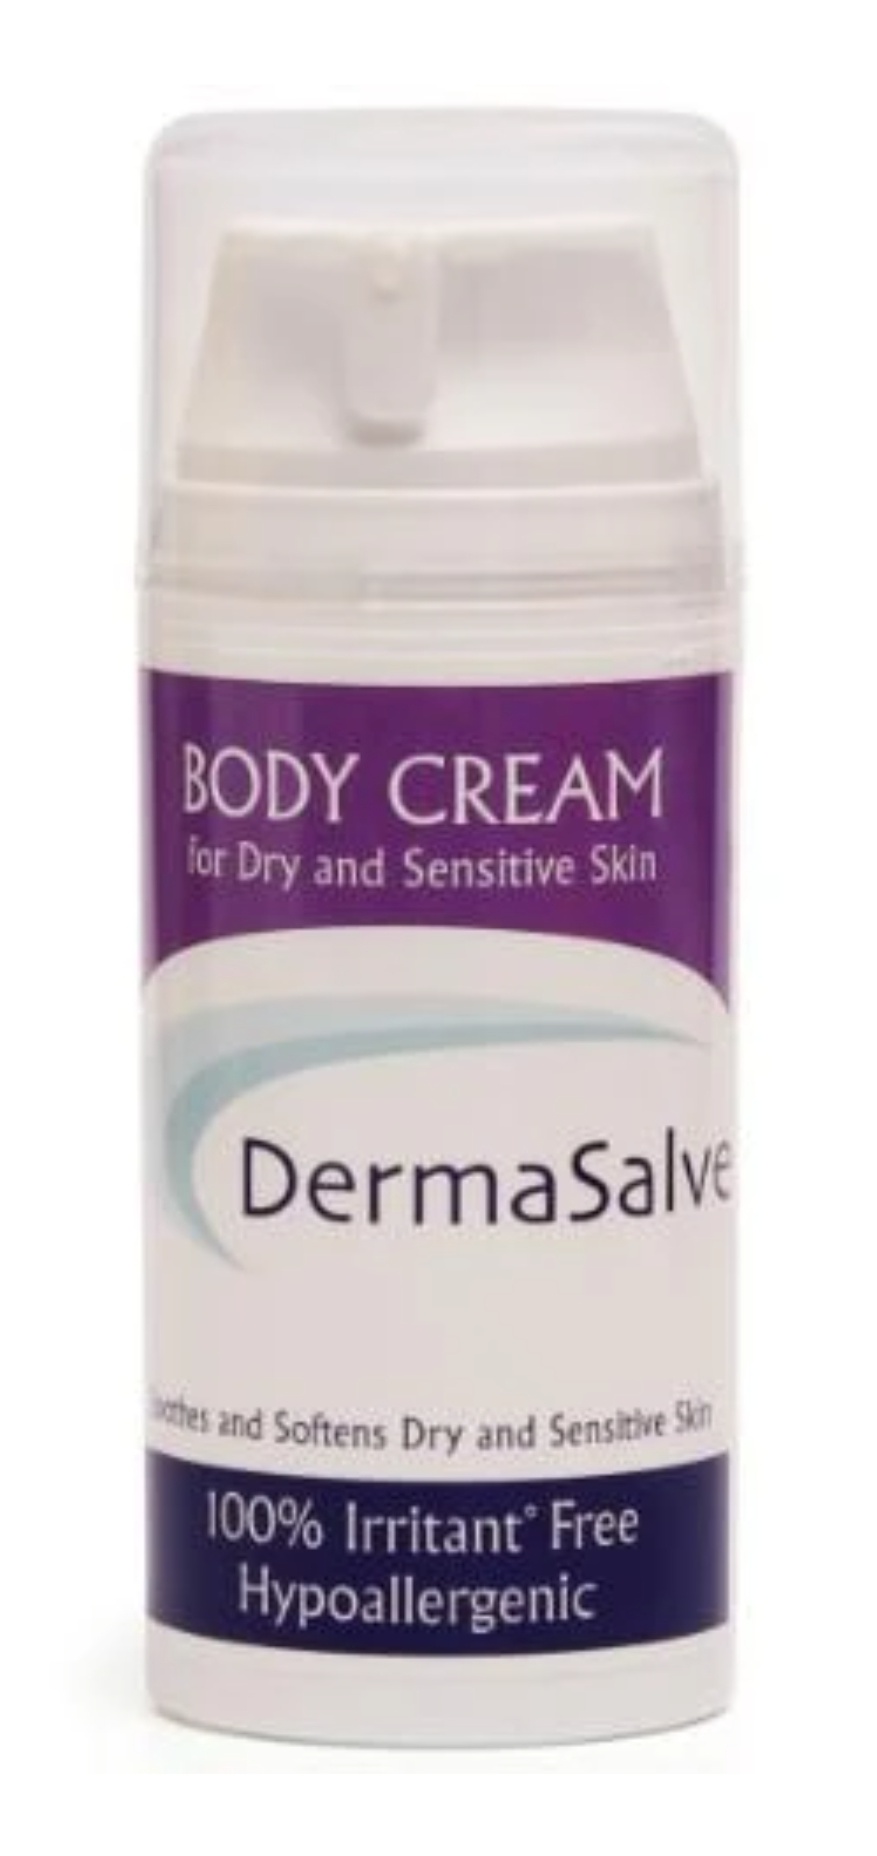 DermaSalve Body Cream